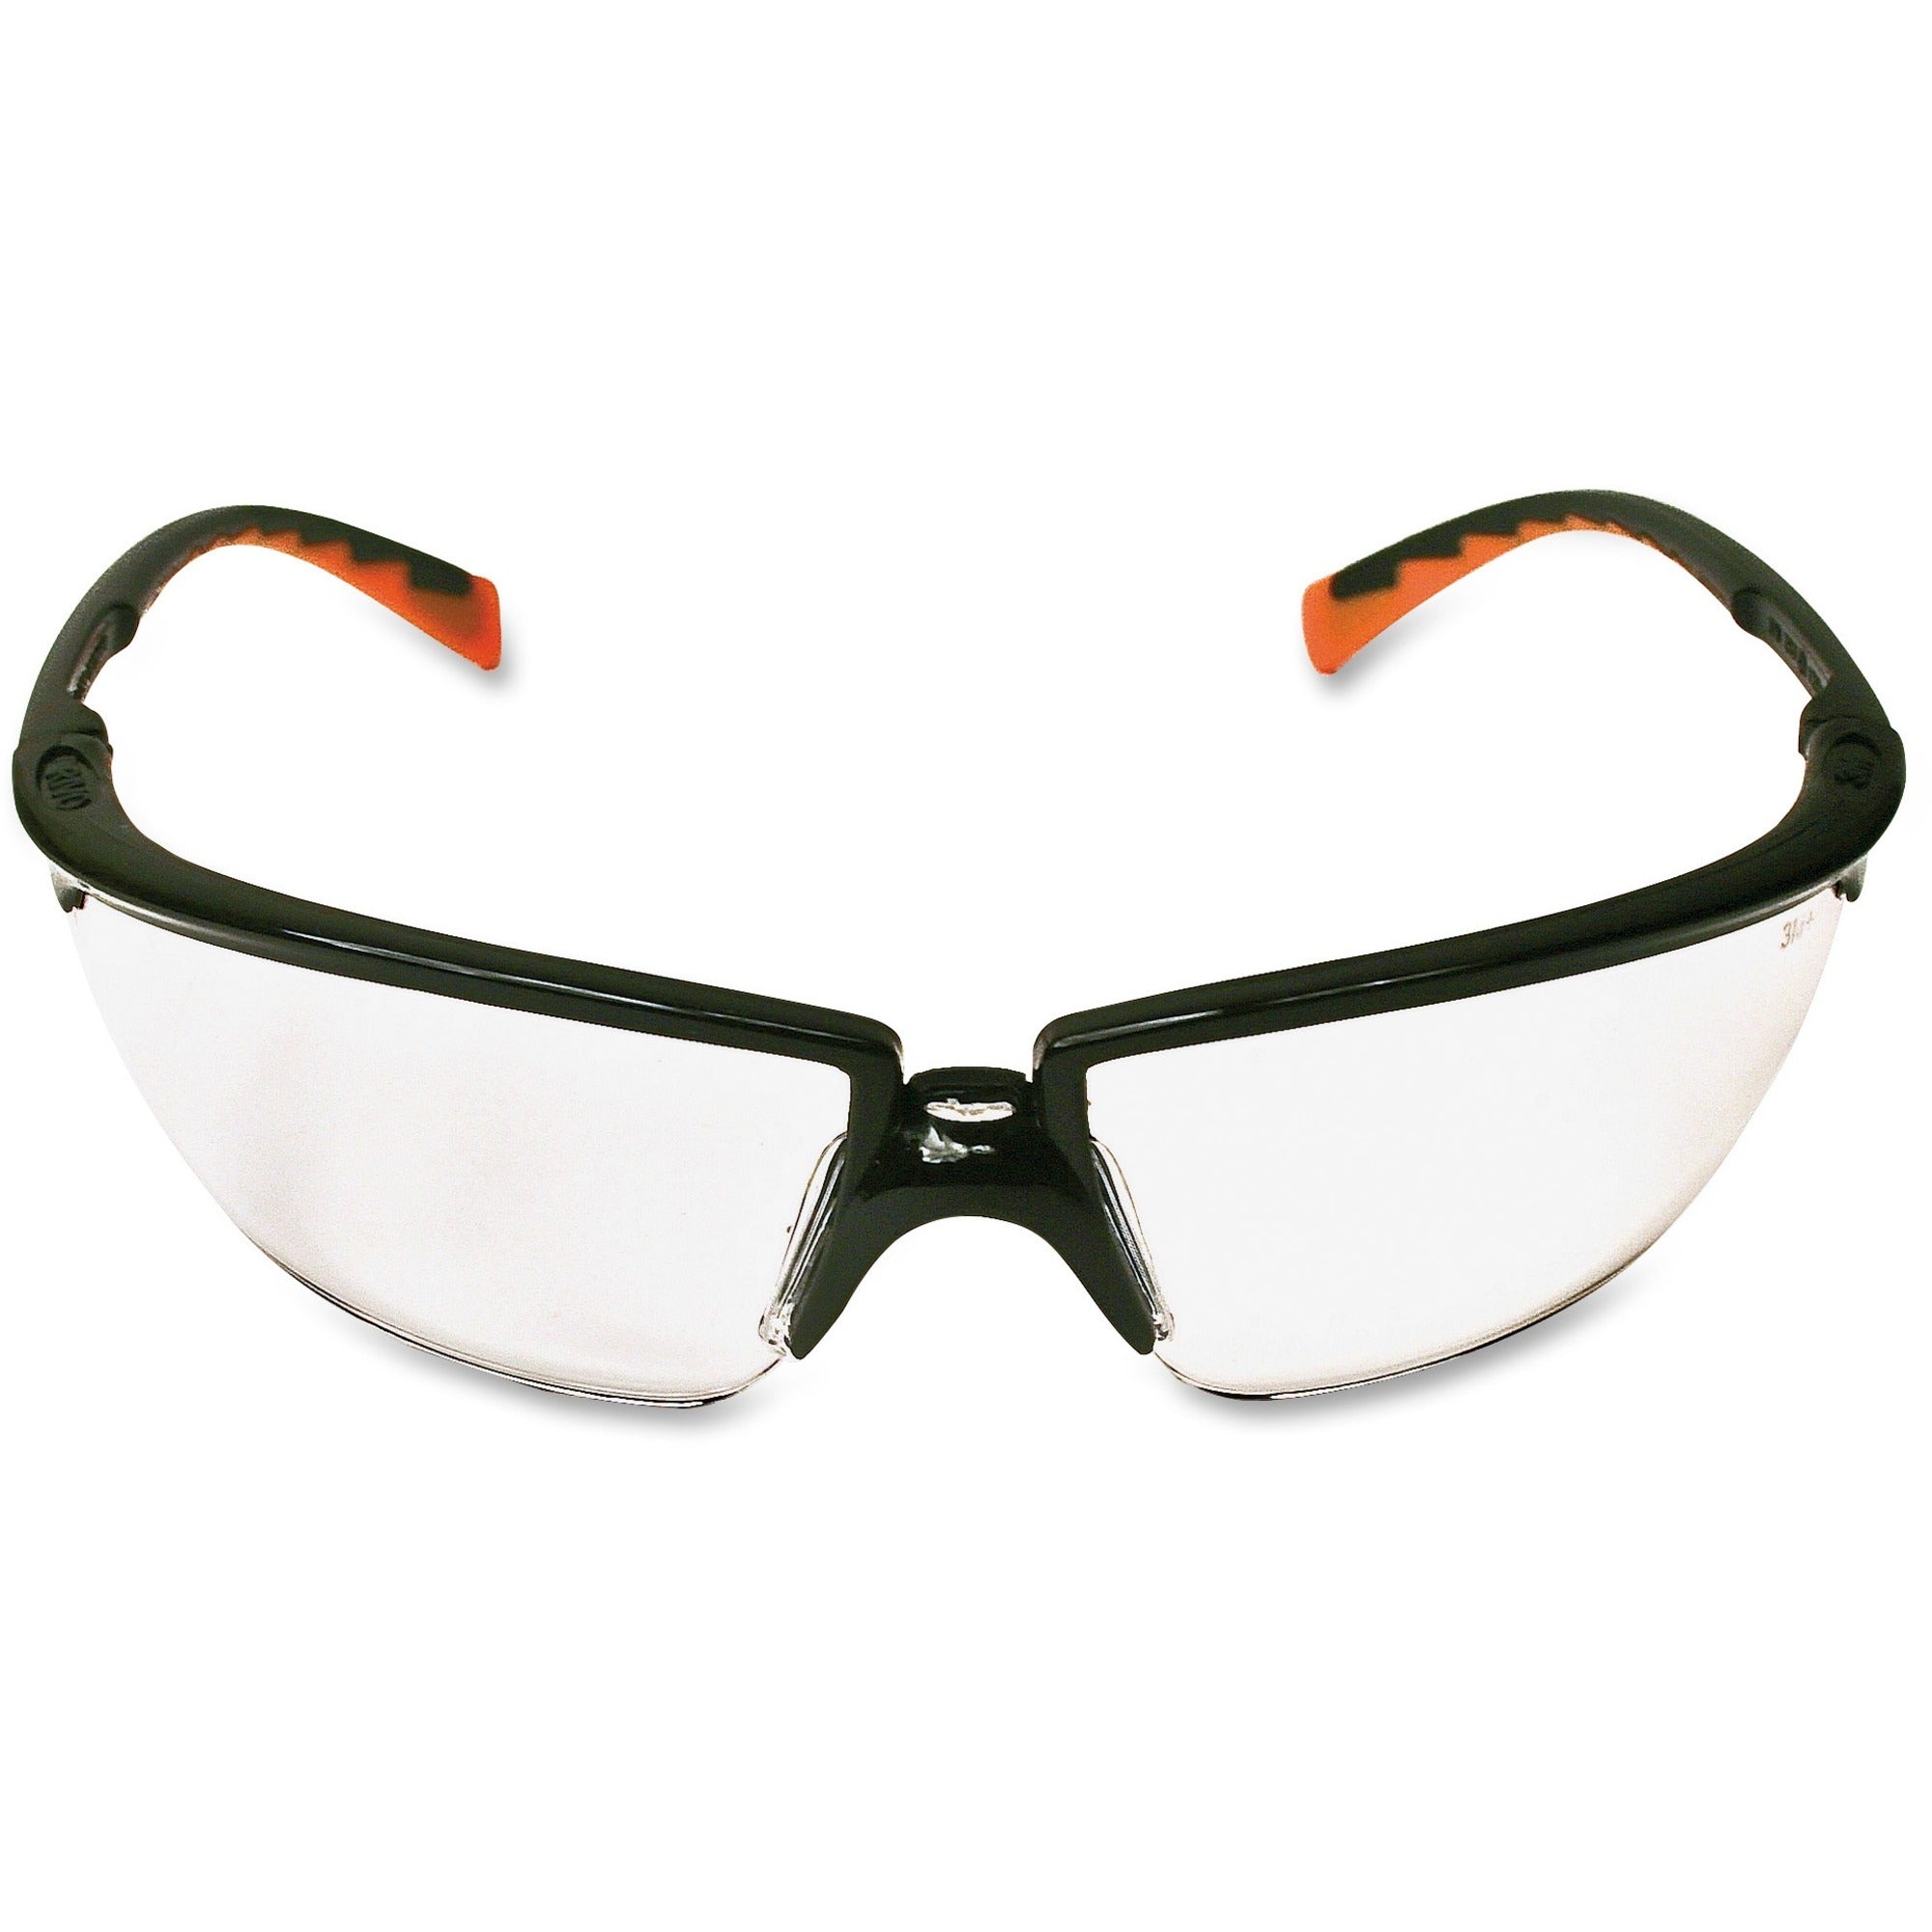 3M Privo Unisex Protective Eyewear - Standard Size - Ultraviolet Protection - Orange - Clear Lens - Black Frame - Comfortable, Anti-fog, UV Resistant, Nose Bridge - 1 Each - 